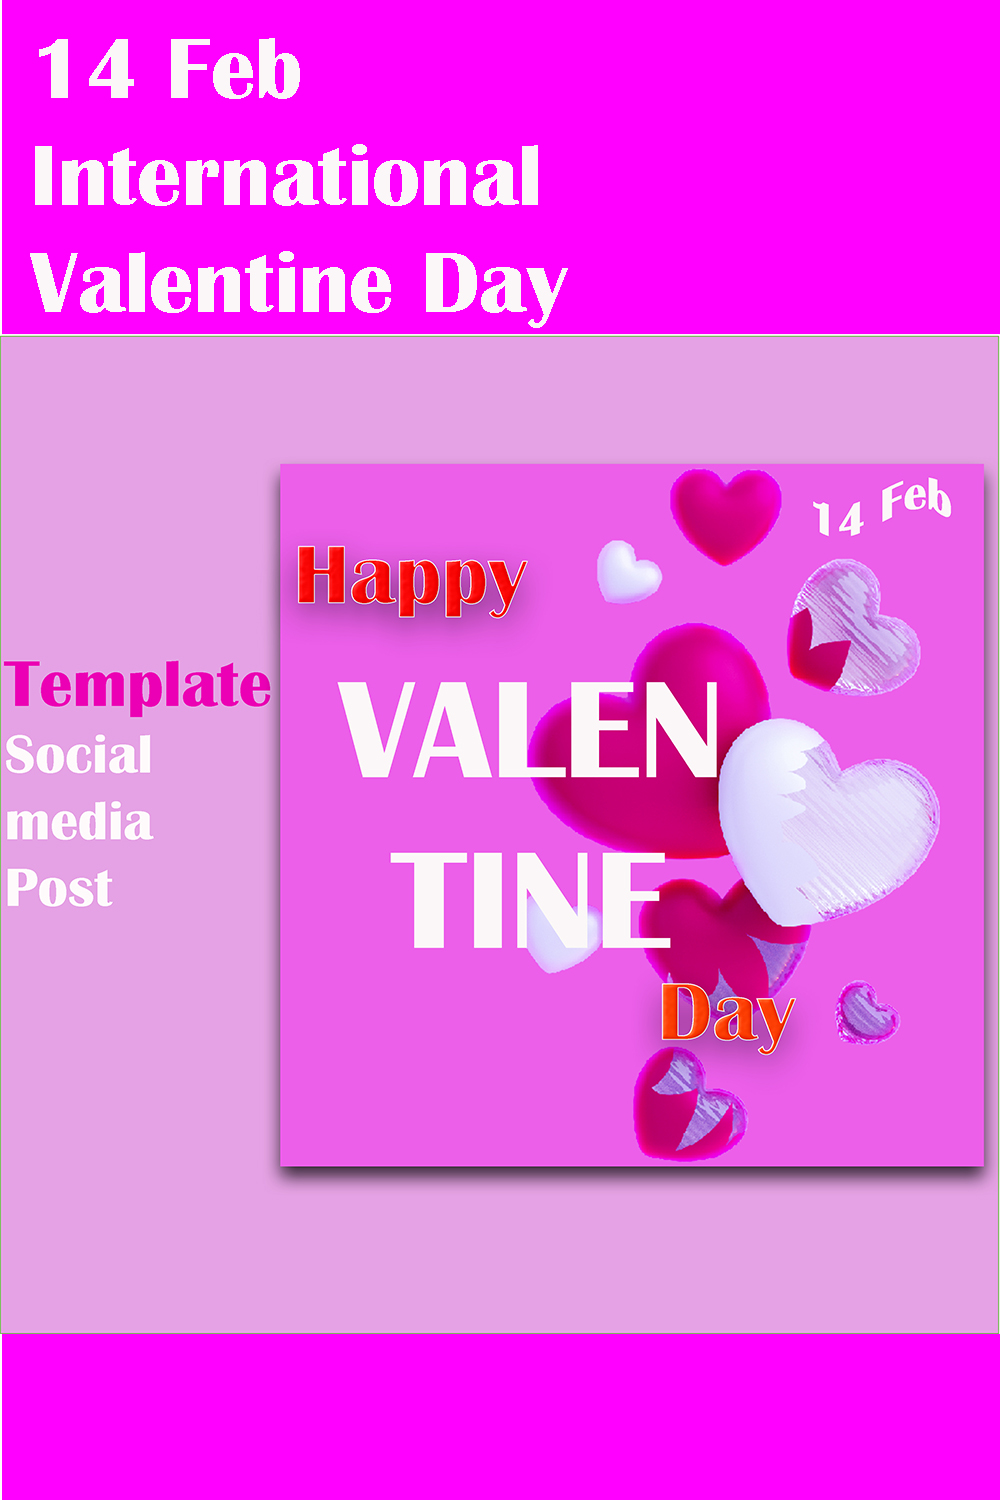 14 Feb international valentine Day pinterest preview image.